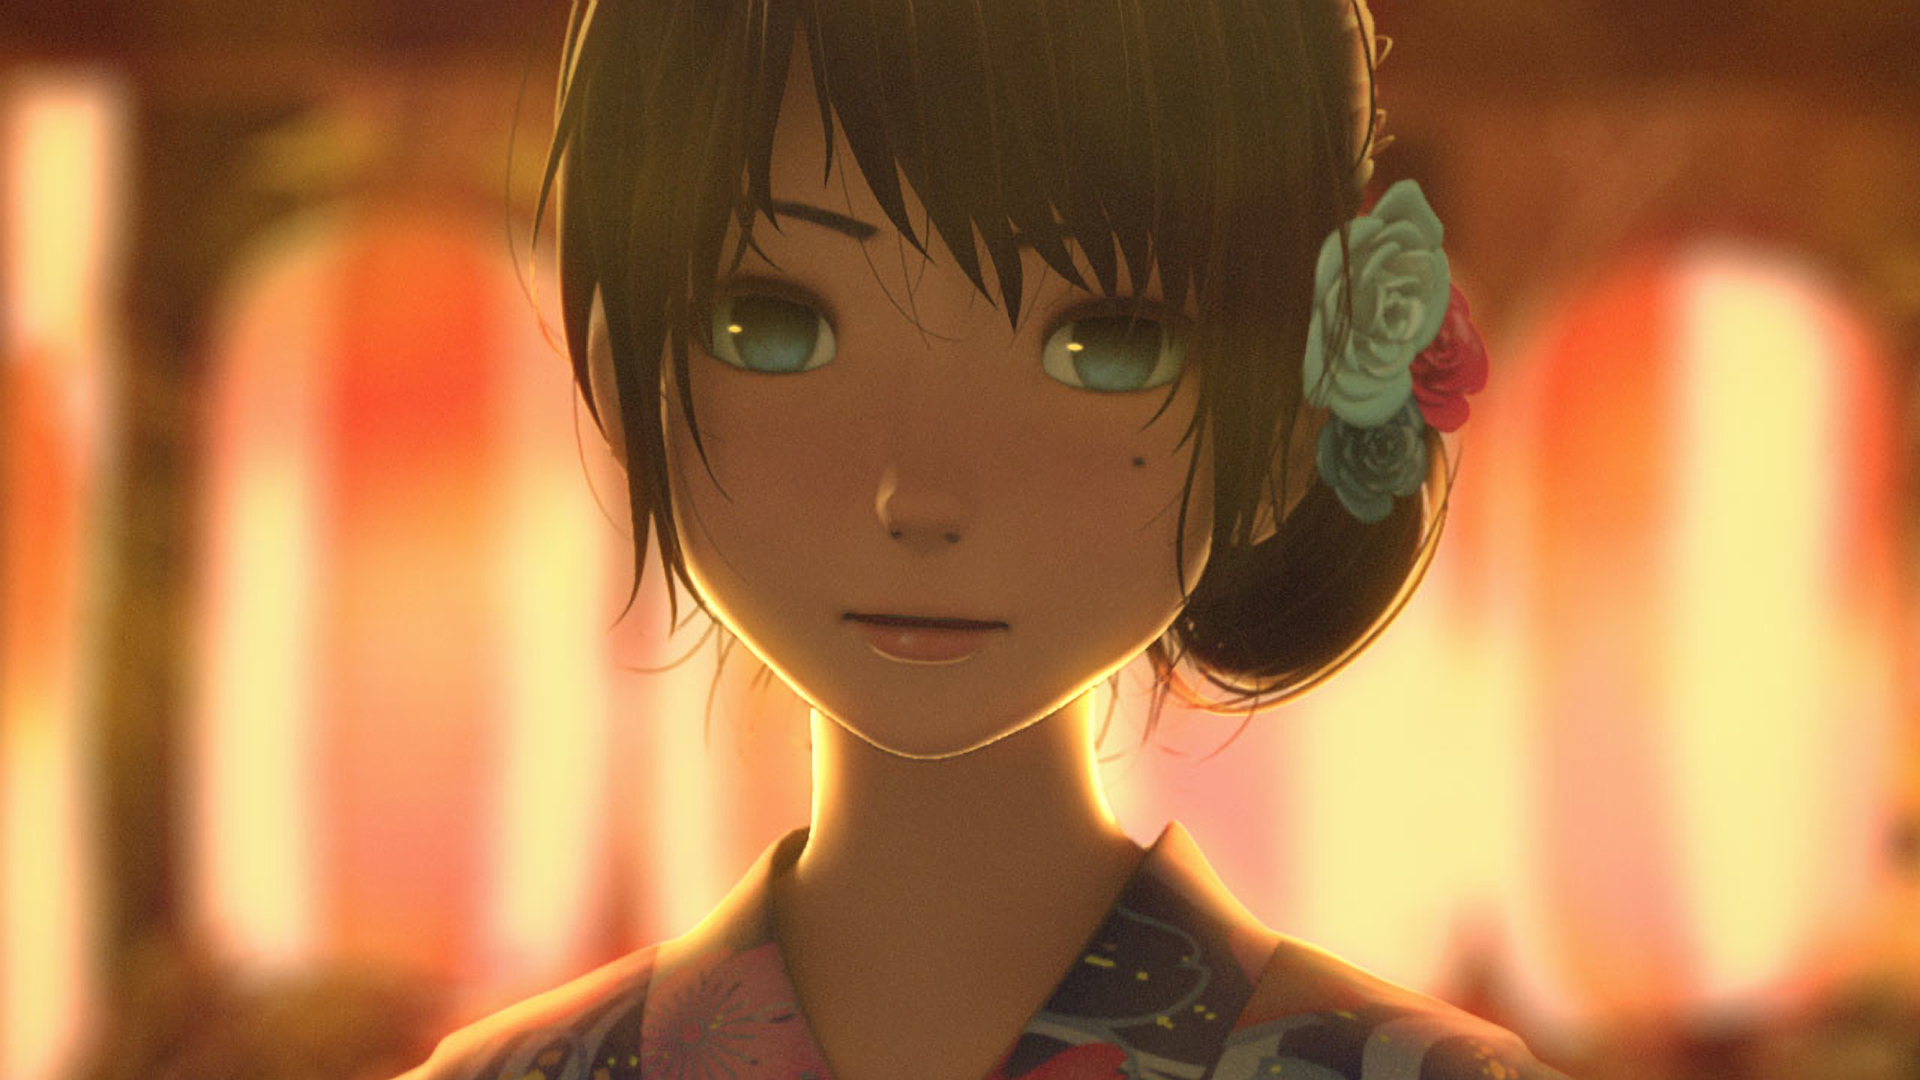 Anime Girl on Grass Animated Wallpaper